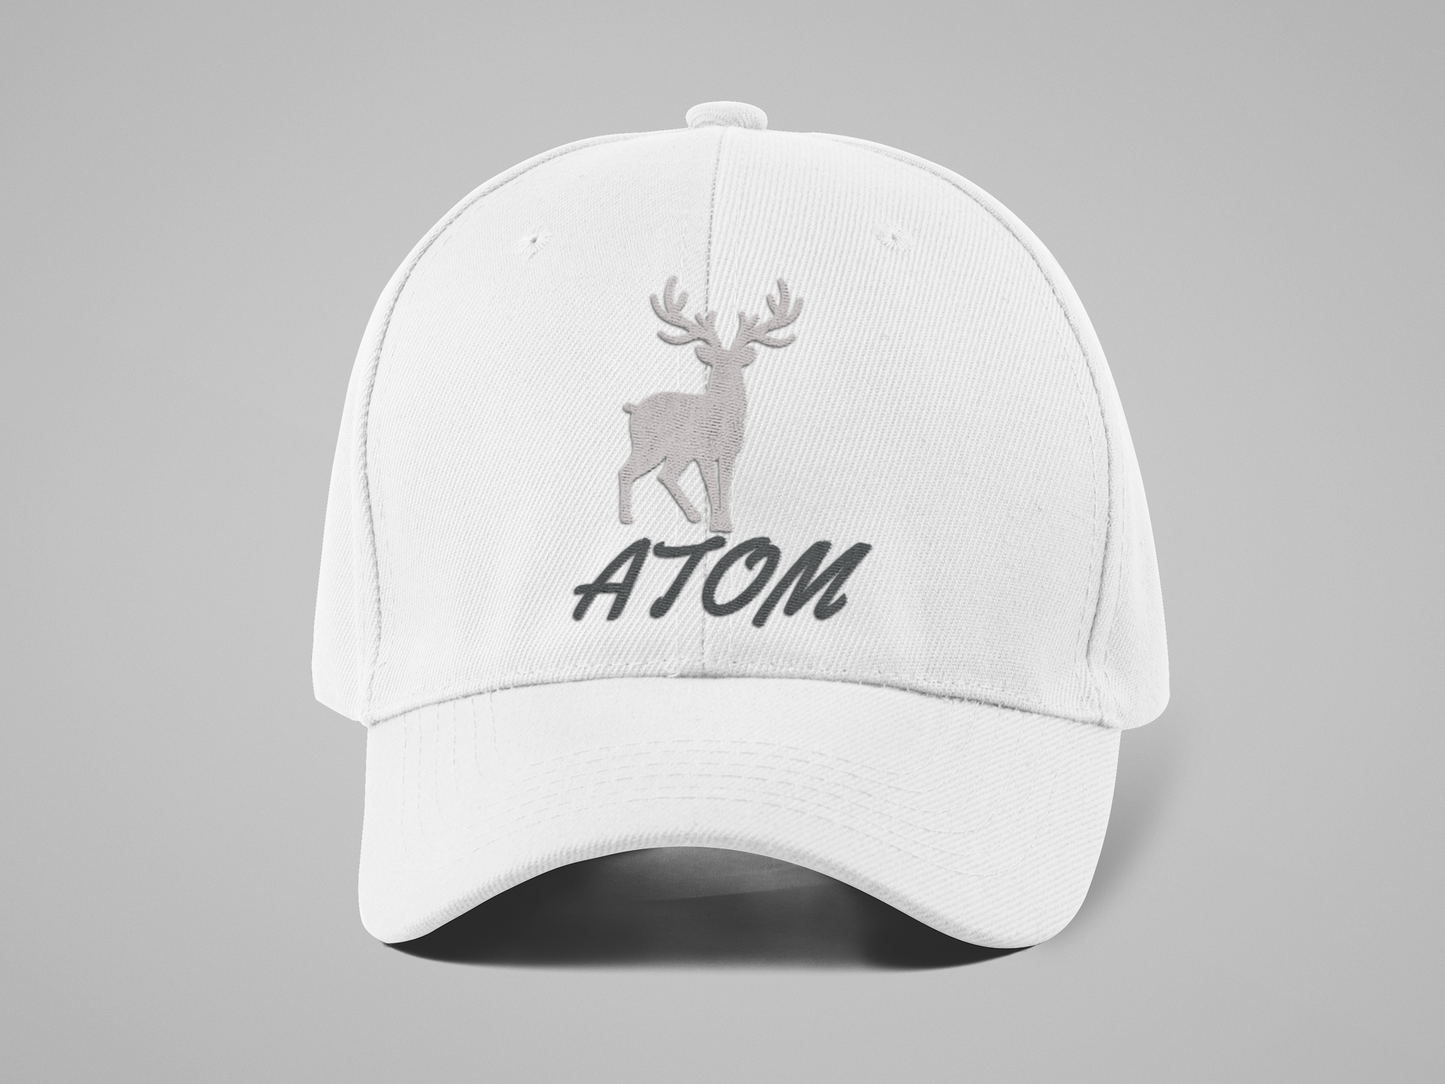 ATOM Italics Design Embroidered White Baseball Cap